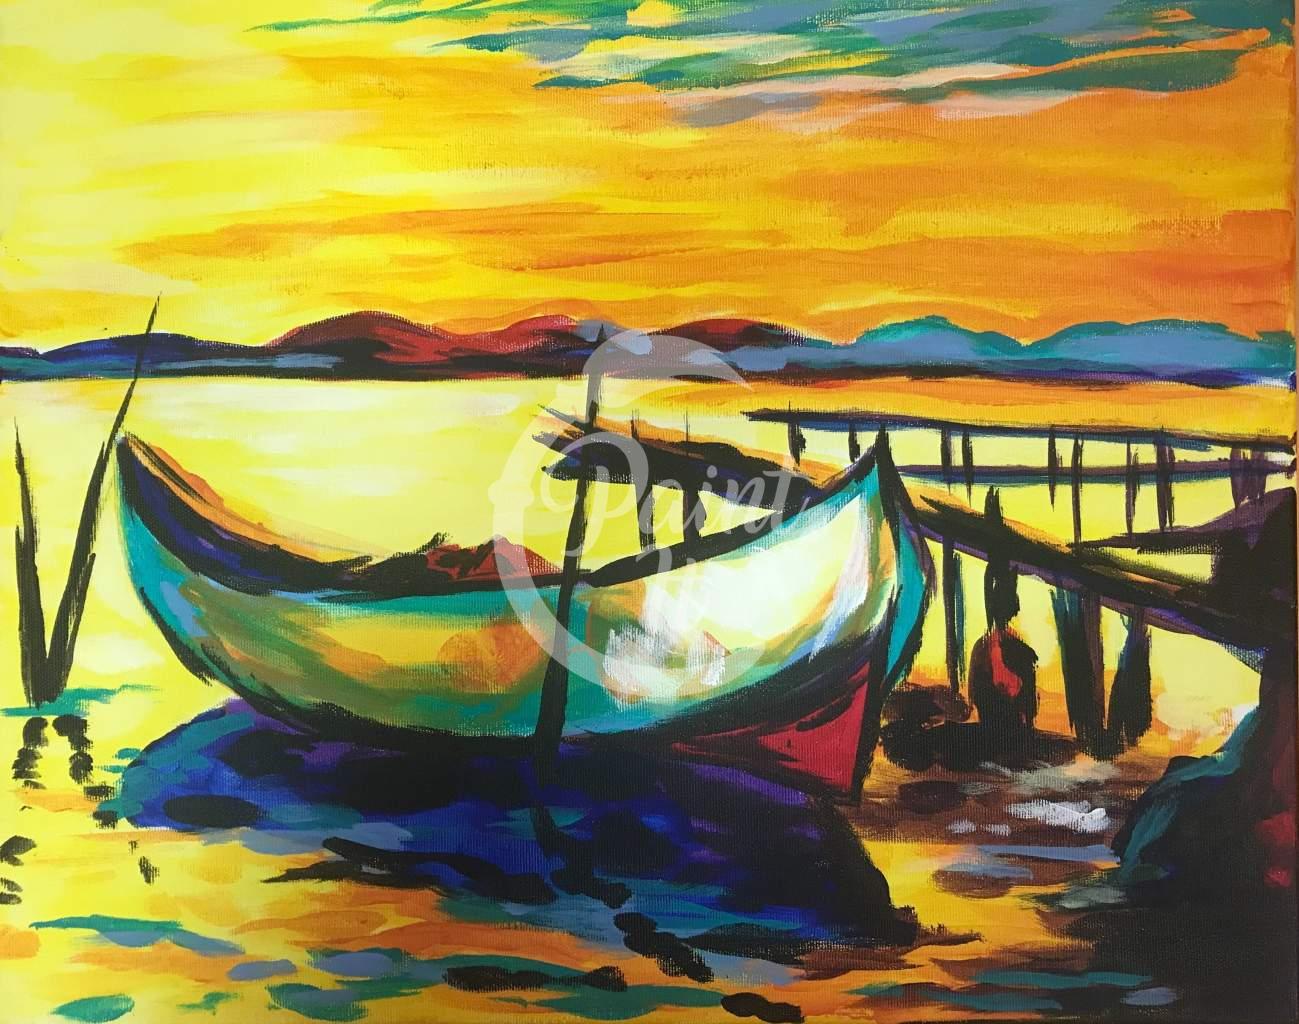  Boat in sunset